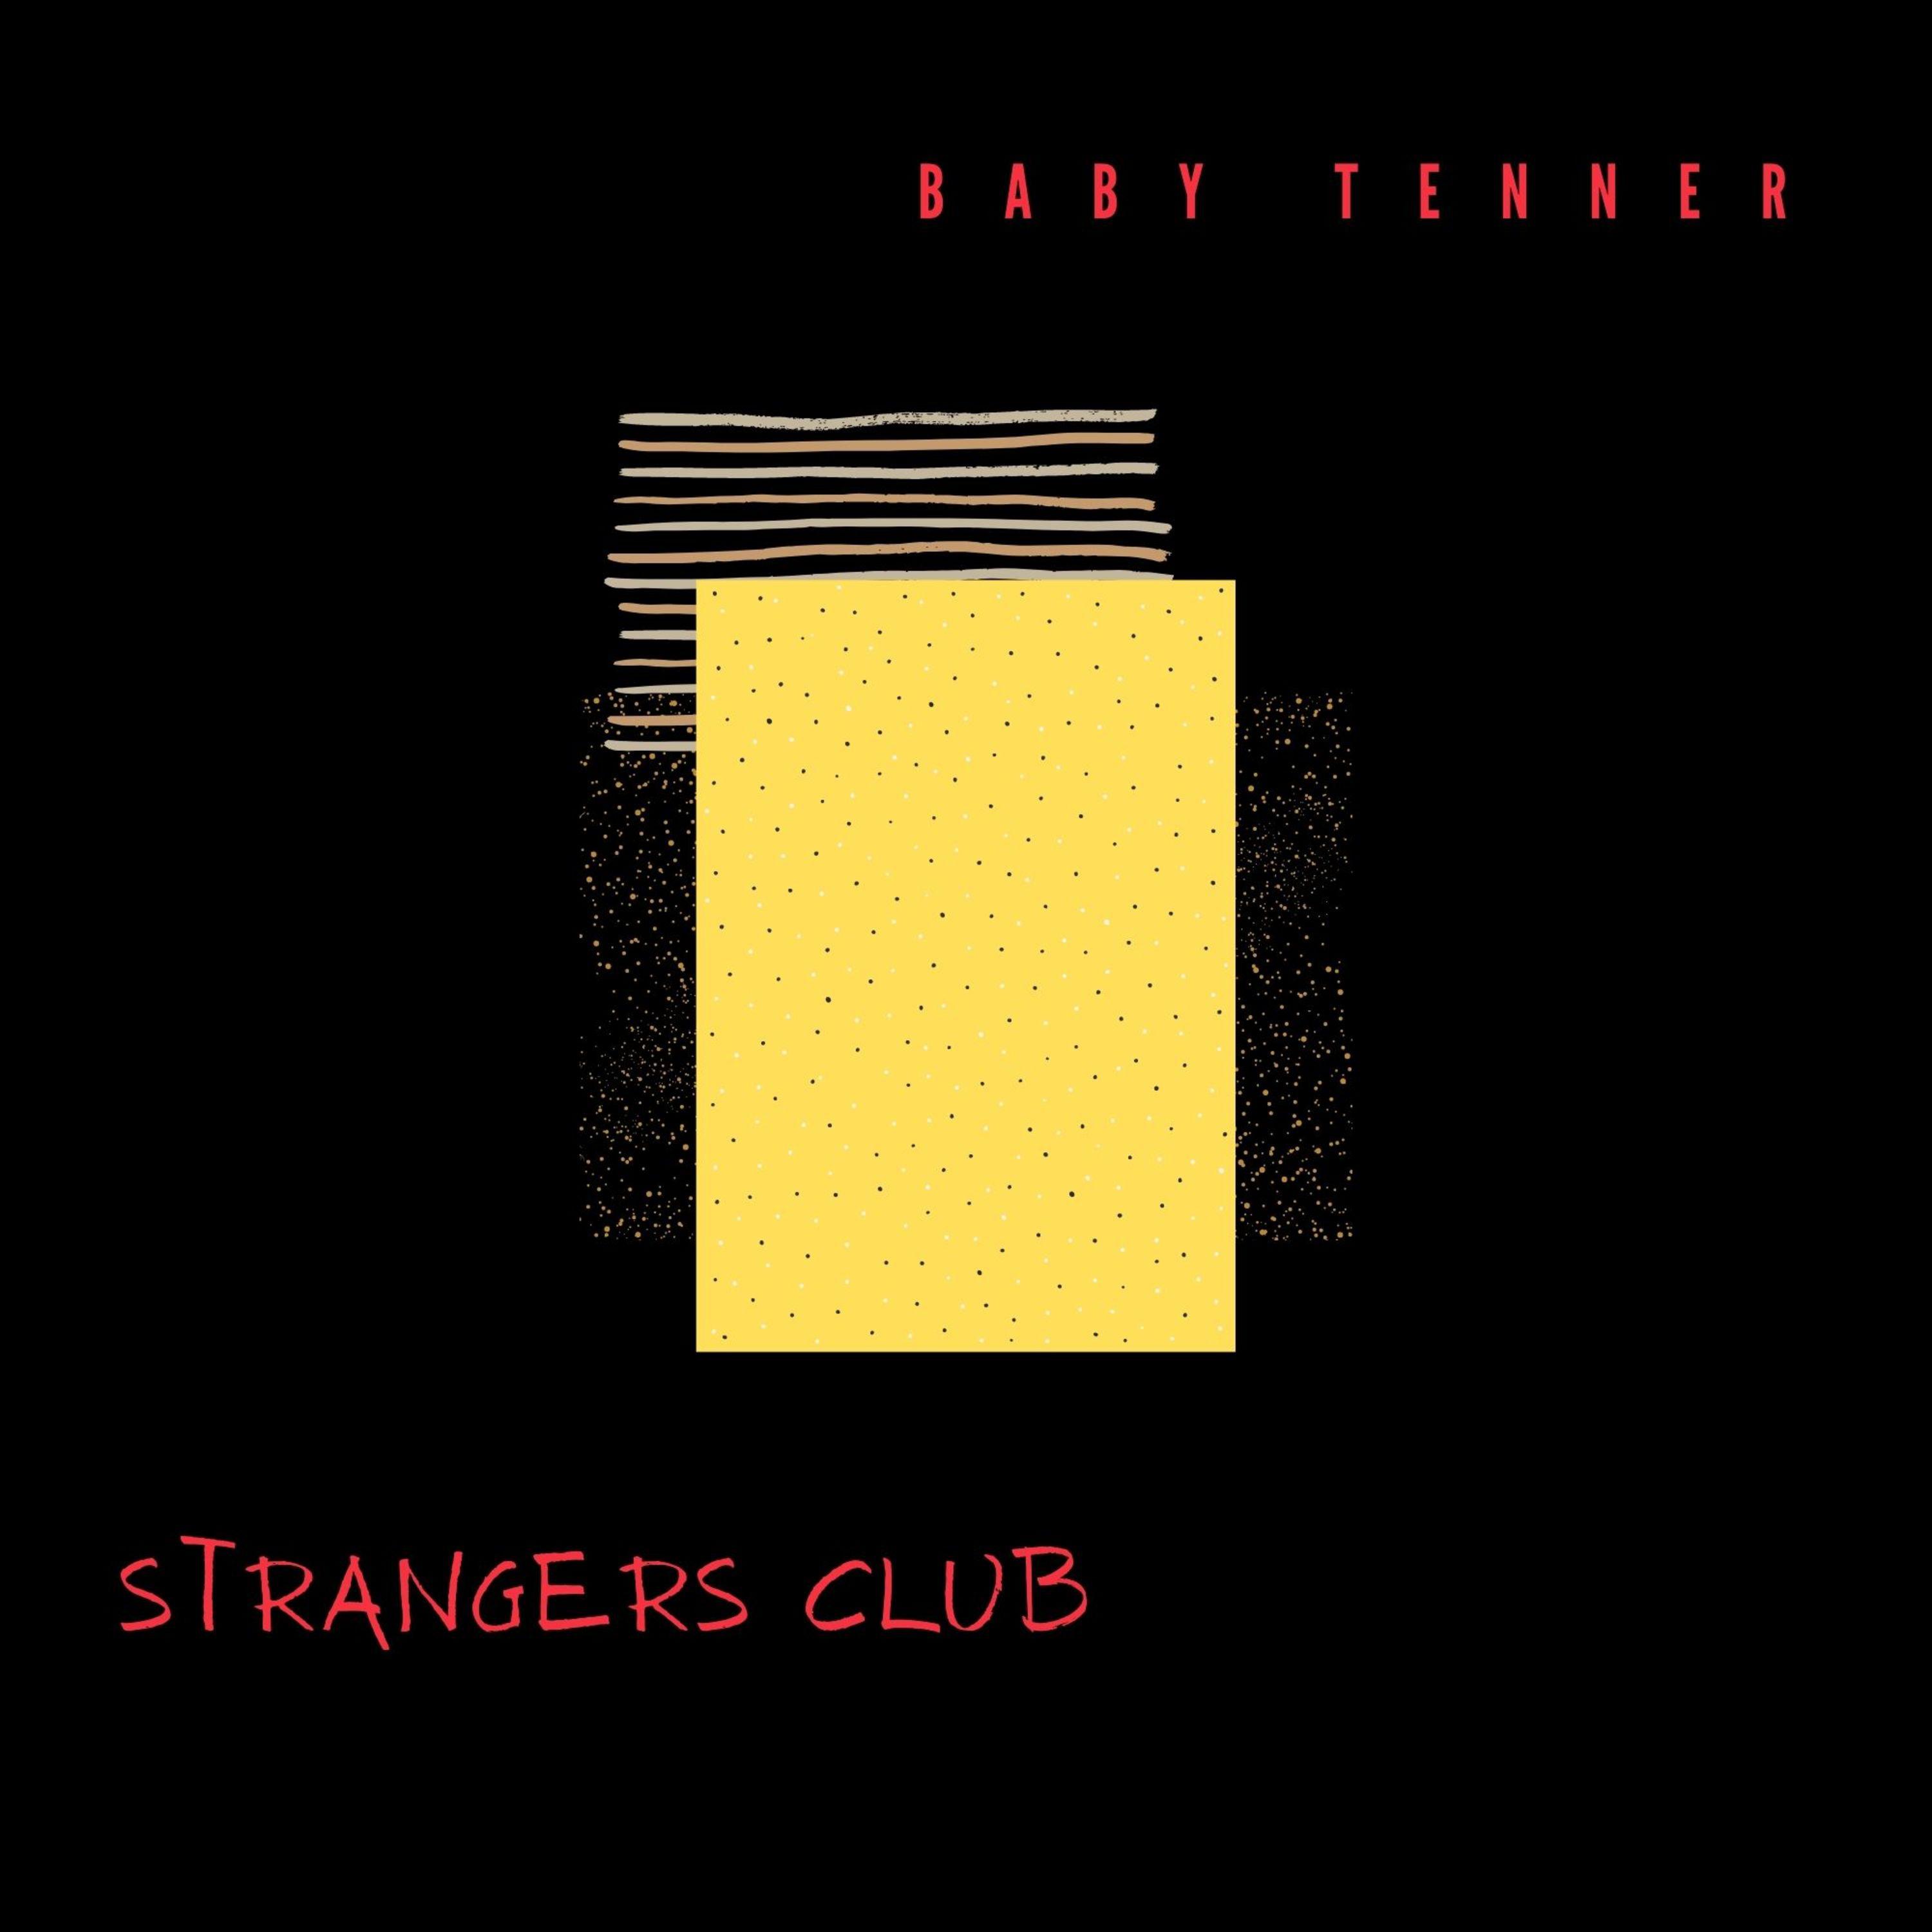 Baby Tenner - Strangers Club